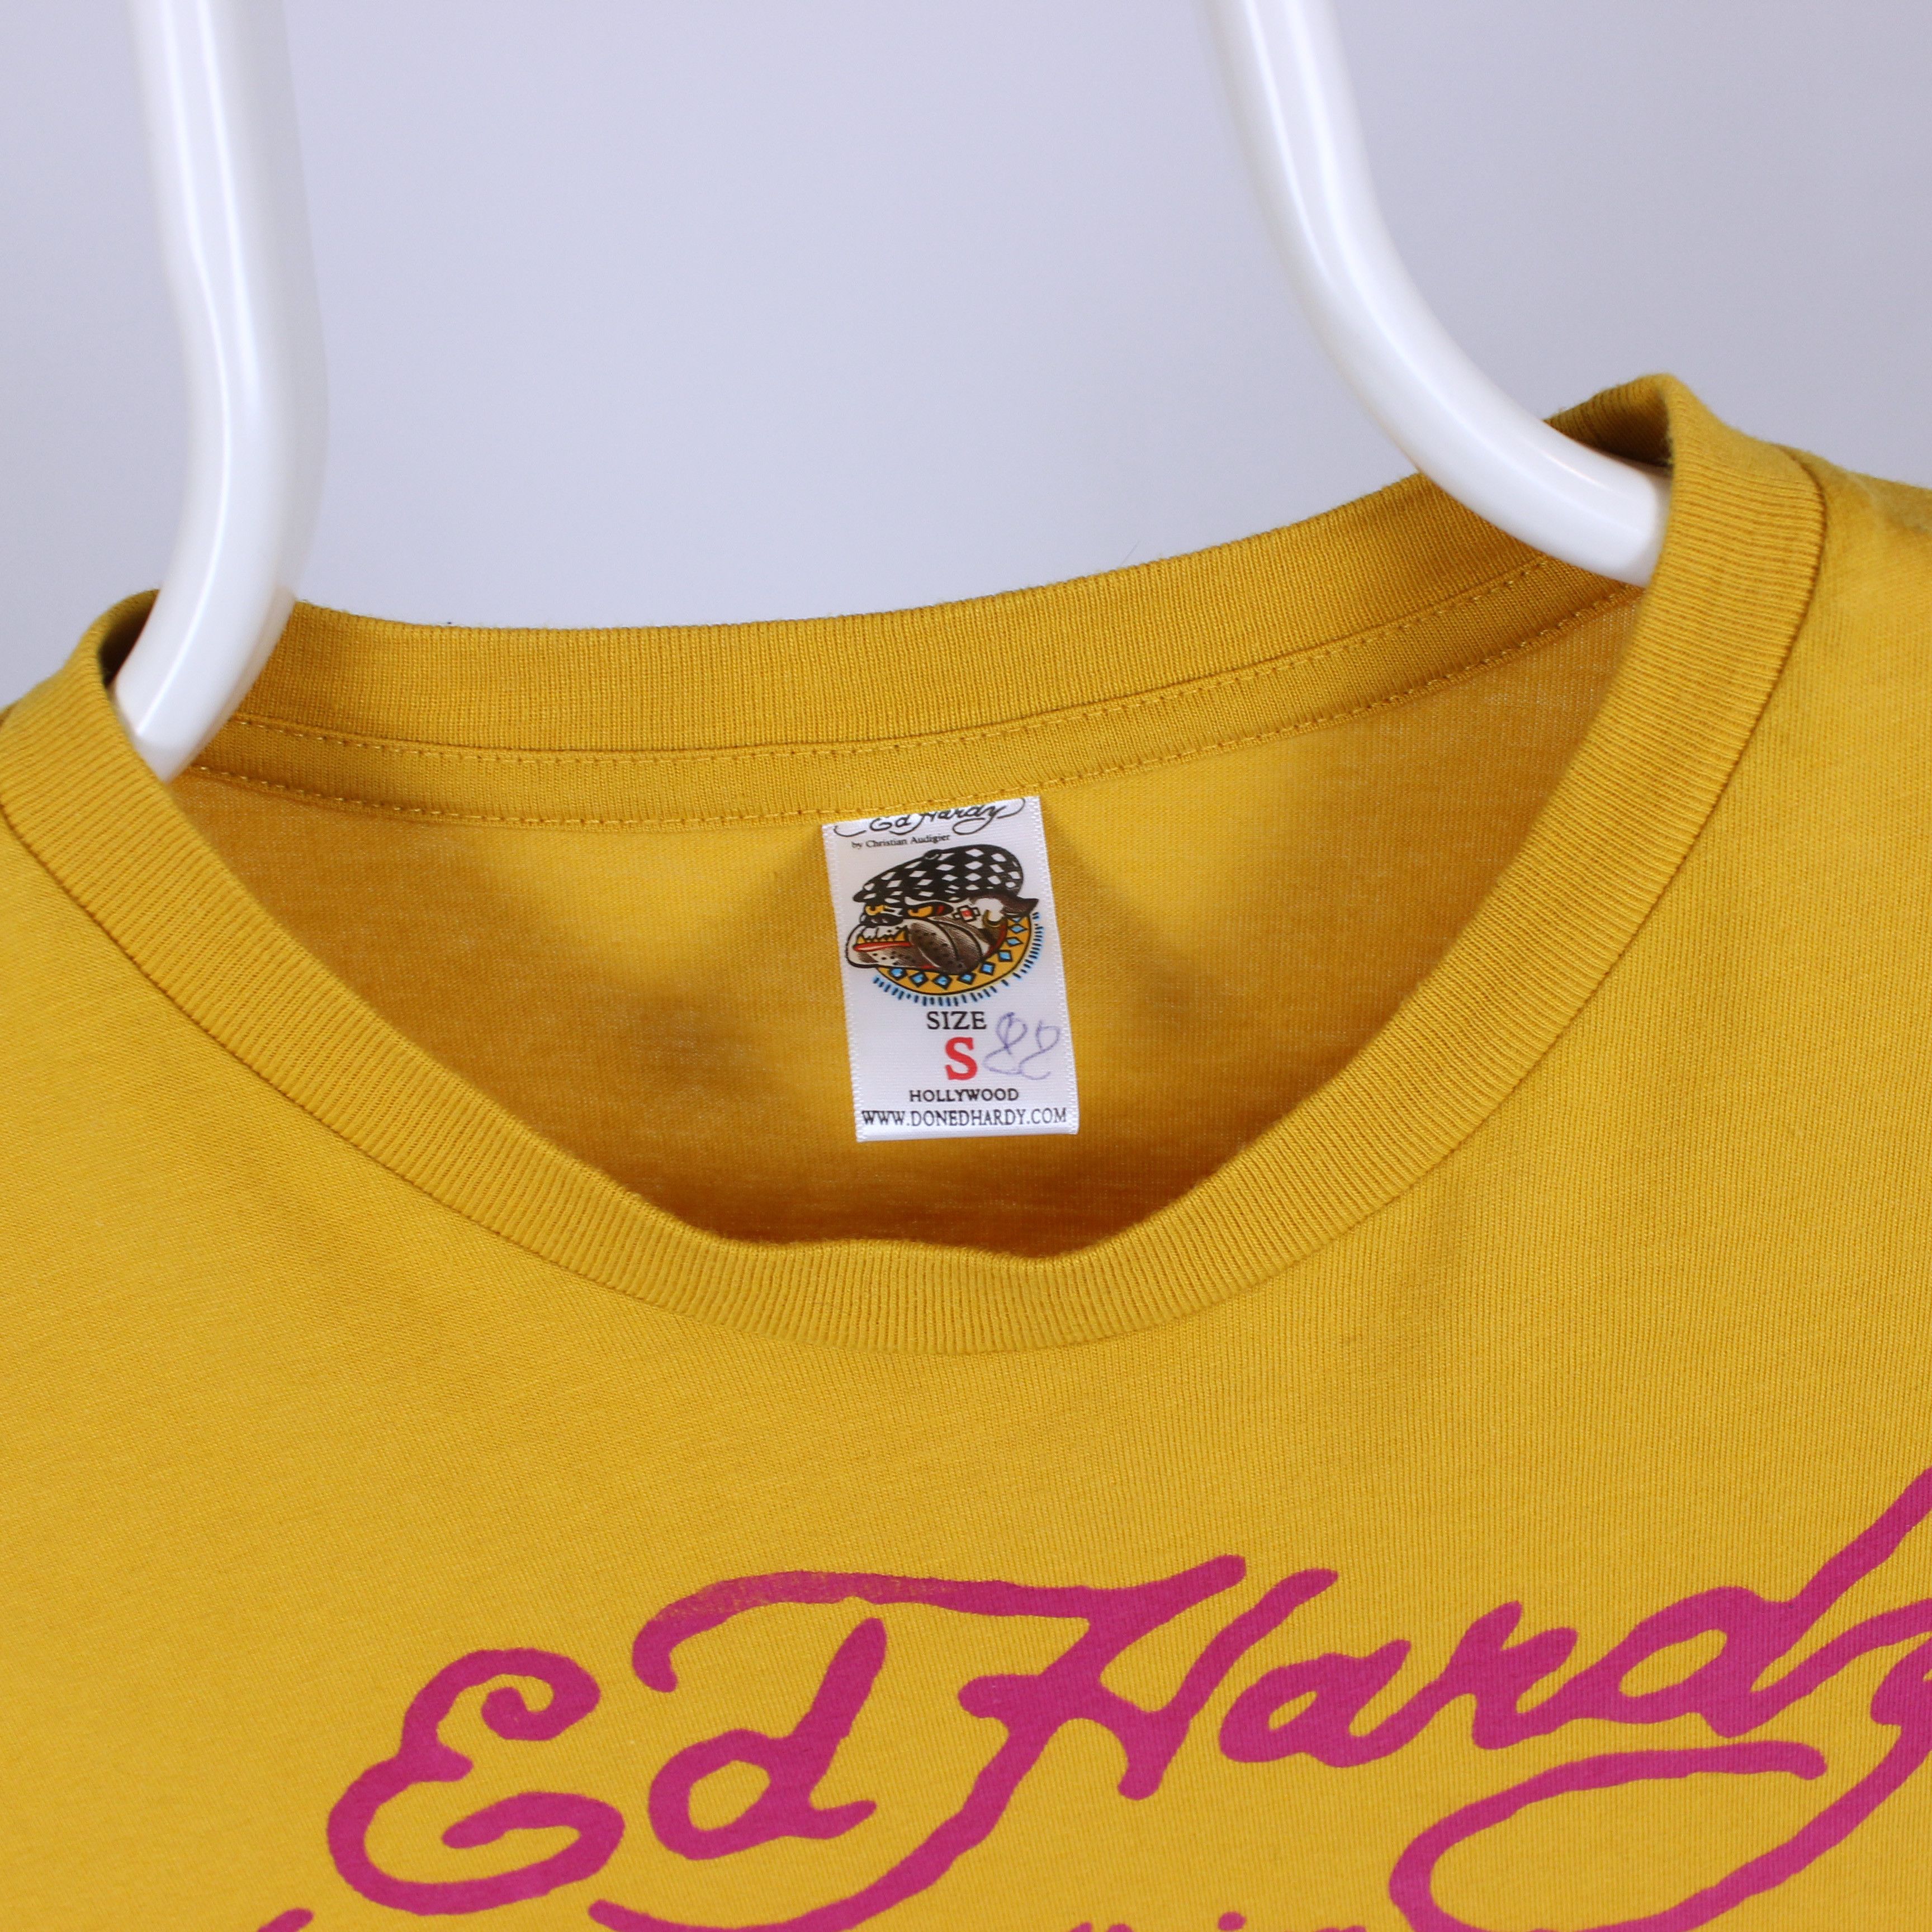 Christian Audigier Vintage ed hardy christian audigier t shirt rare big logo Size US S / EU 44-46 / 1 - 3 Thumbnail